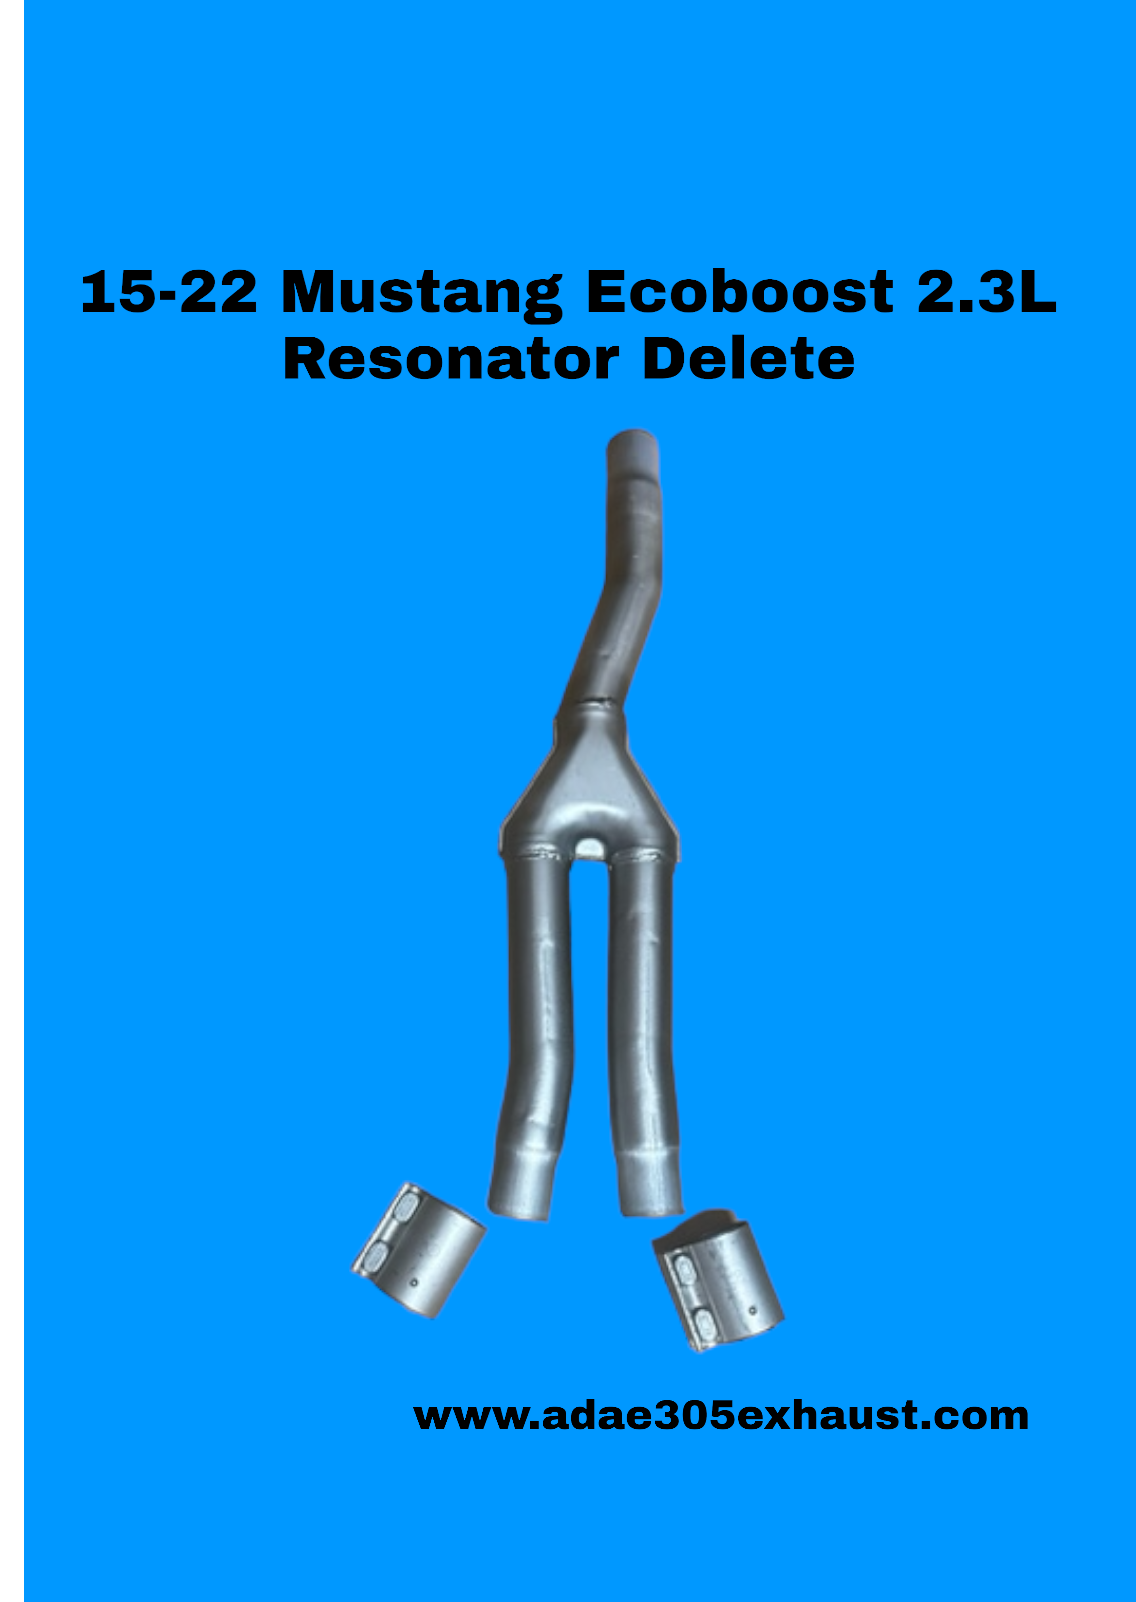 15-22 Mustang Ecoboost 2.3L Resonator Delete